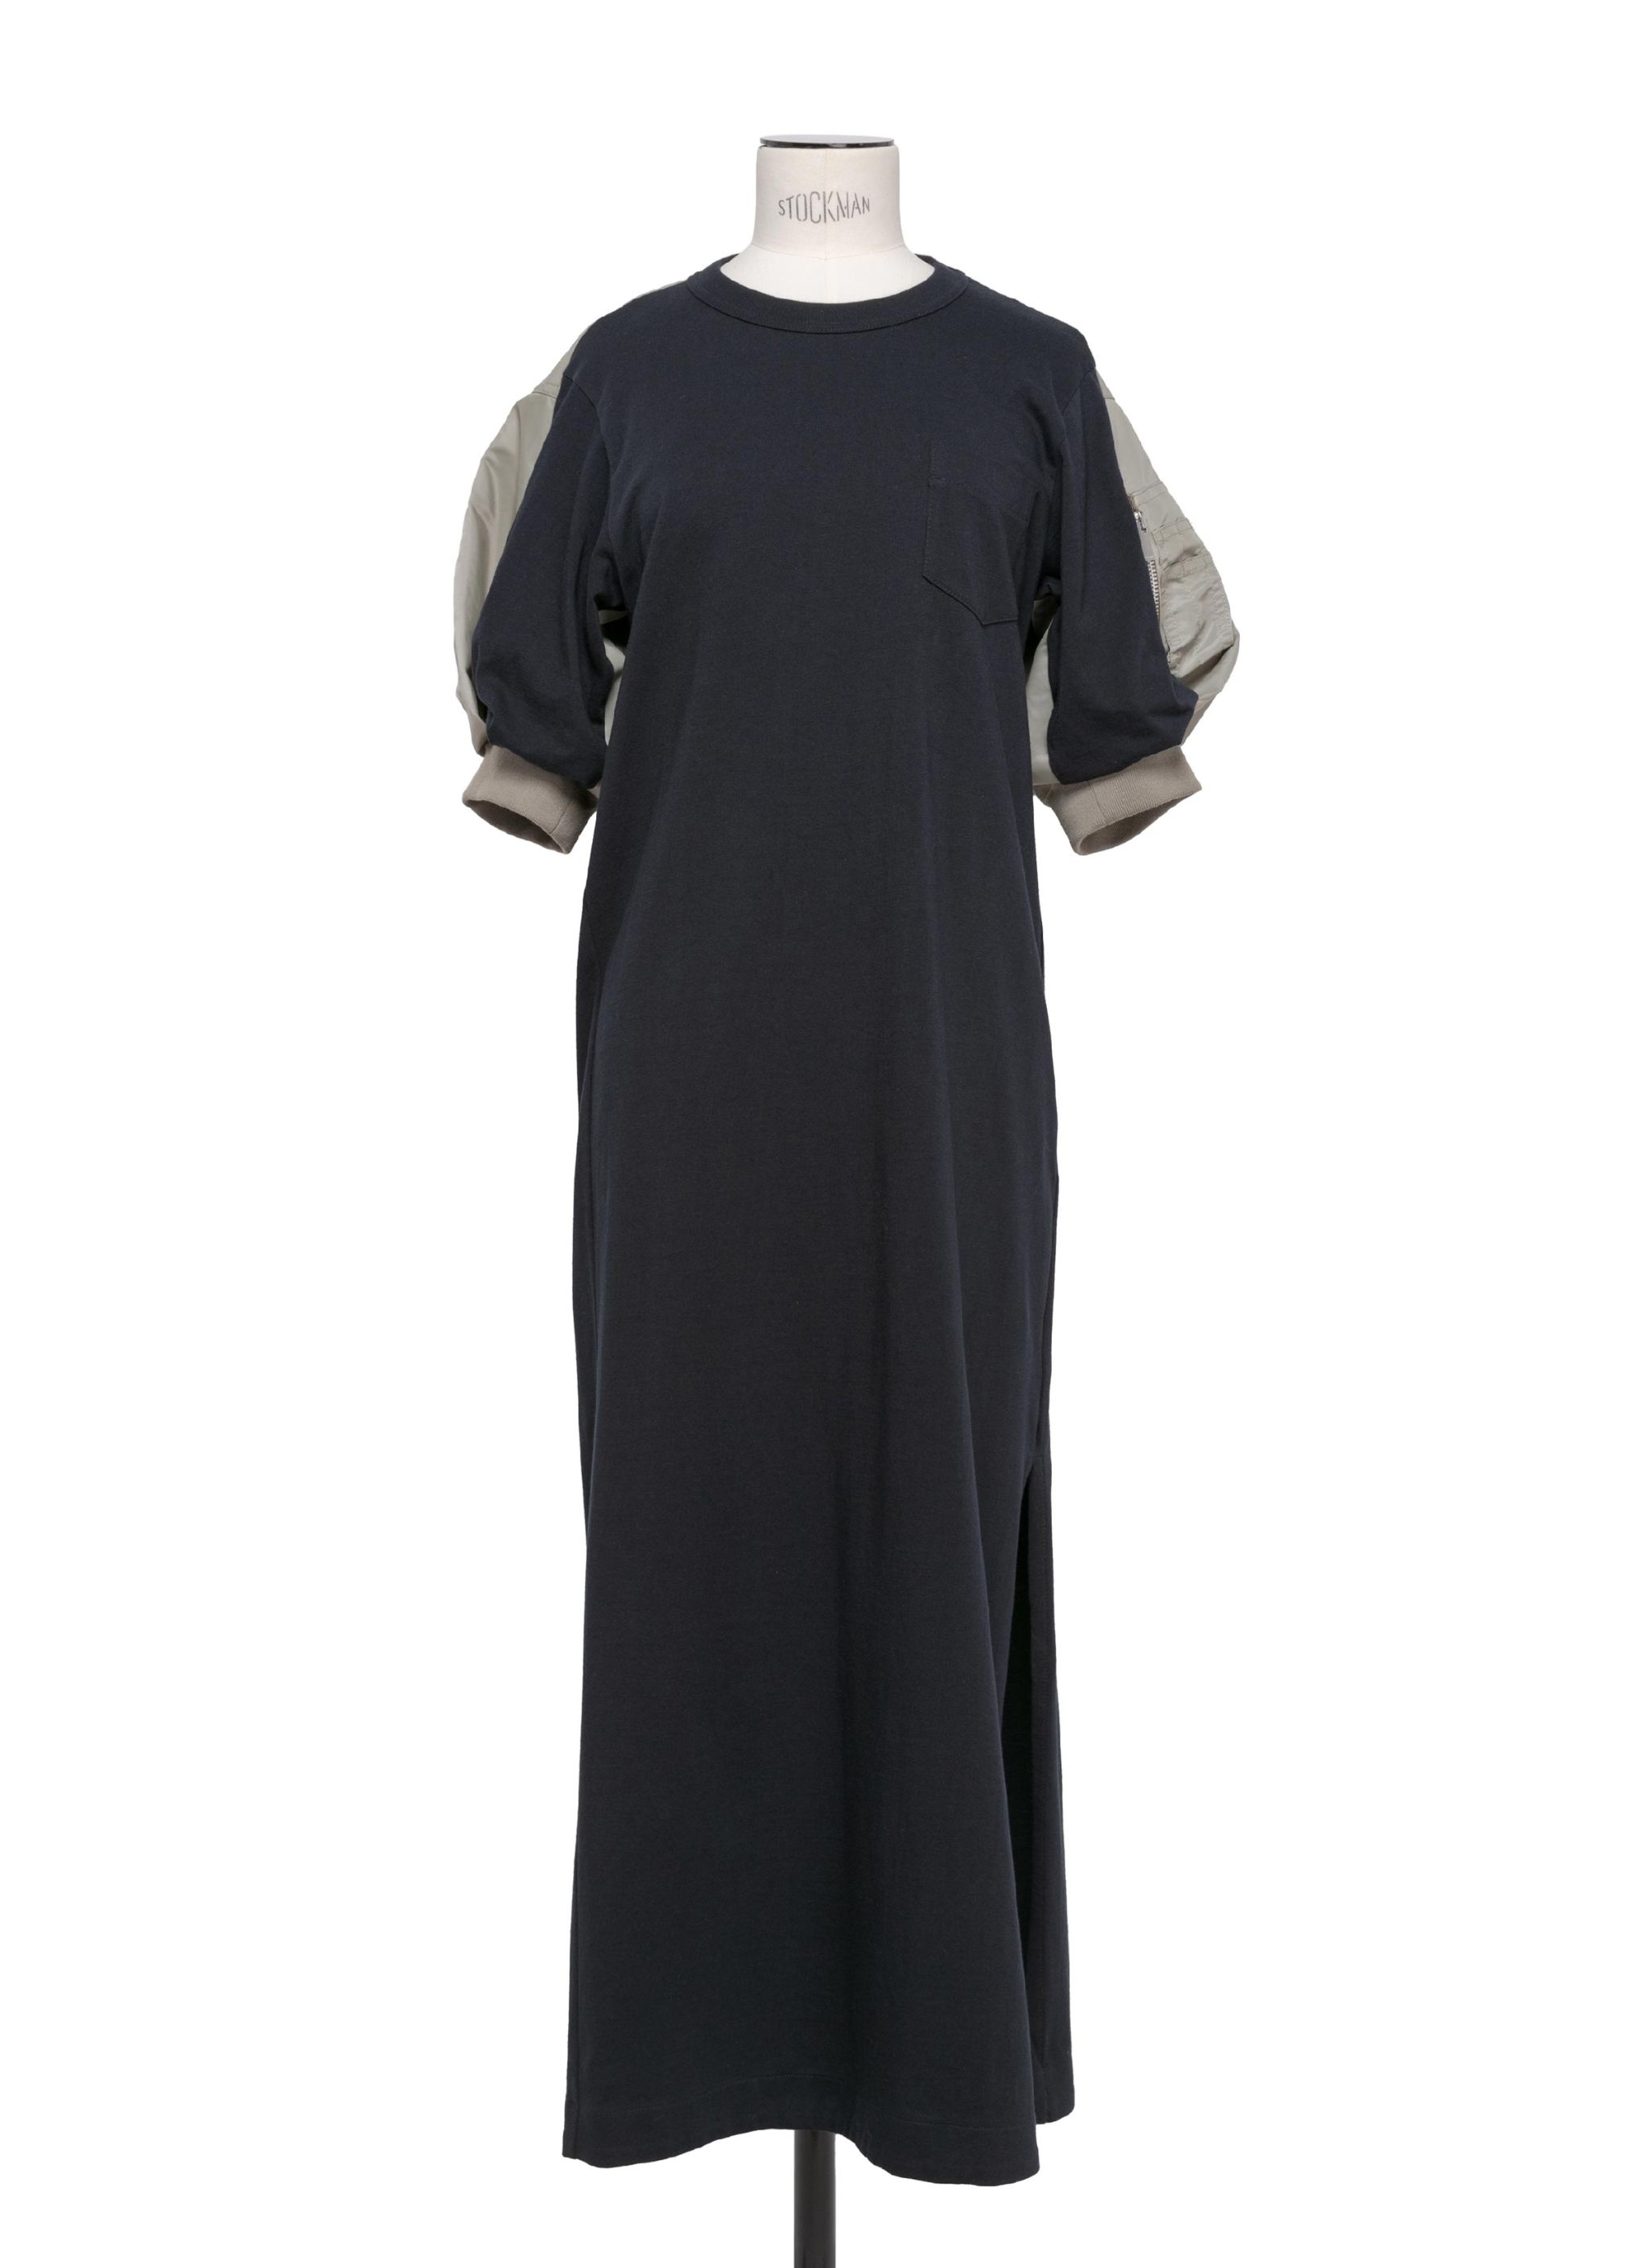 Nylon Twill x Cotton Jersey Dress - 1